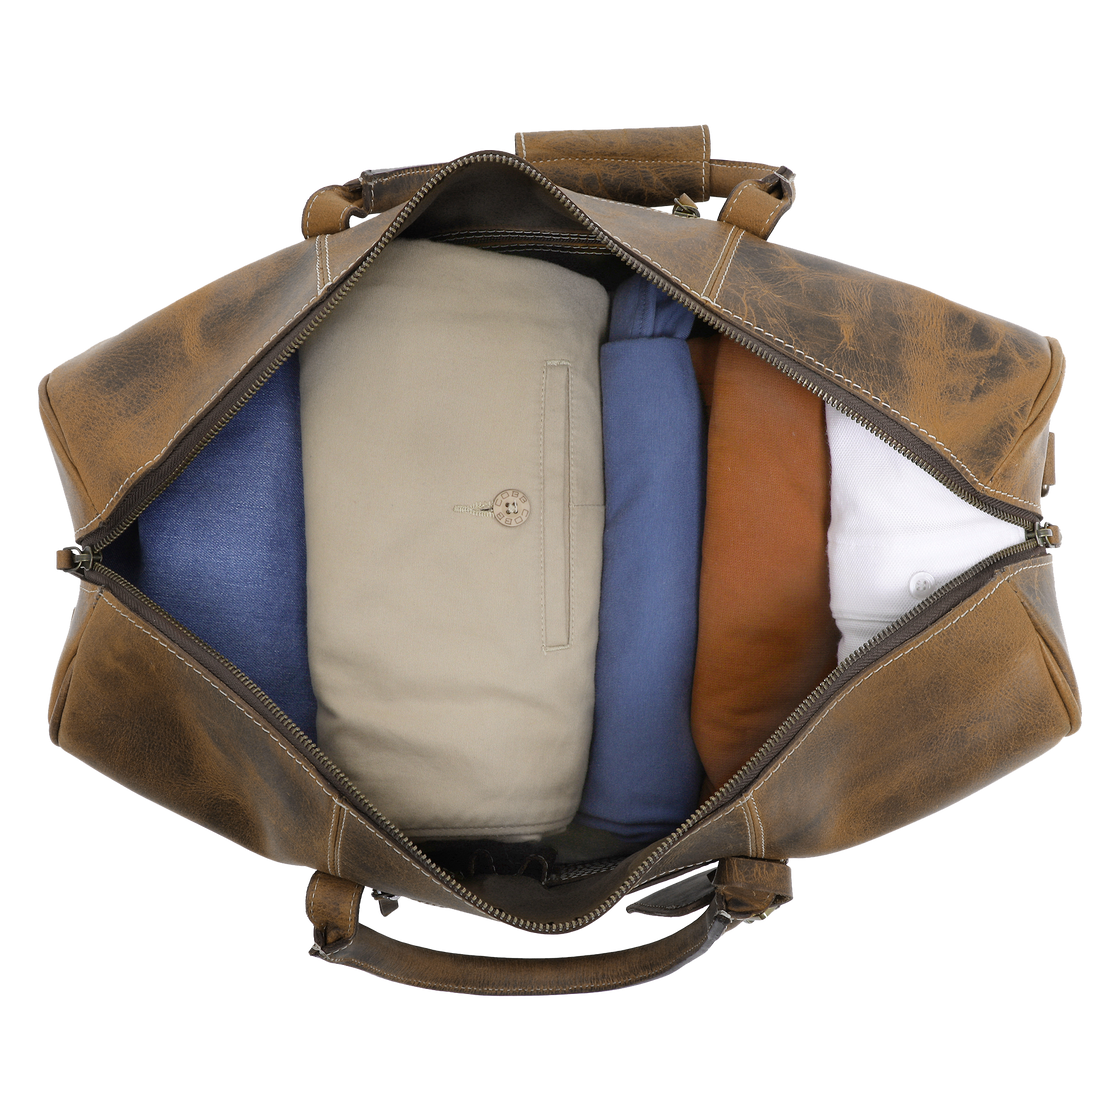 Sasha Travel Duffle Bag (Brown)